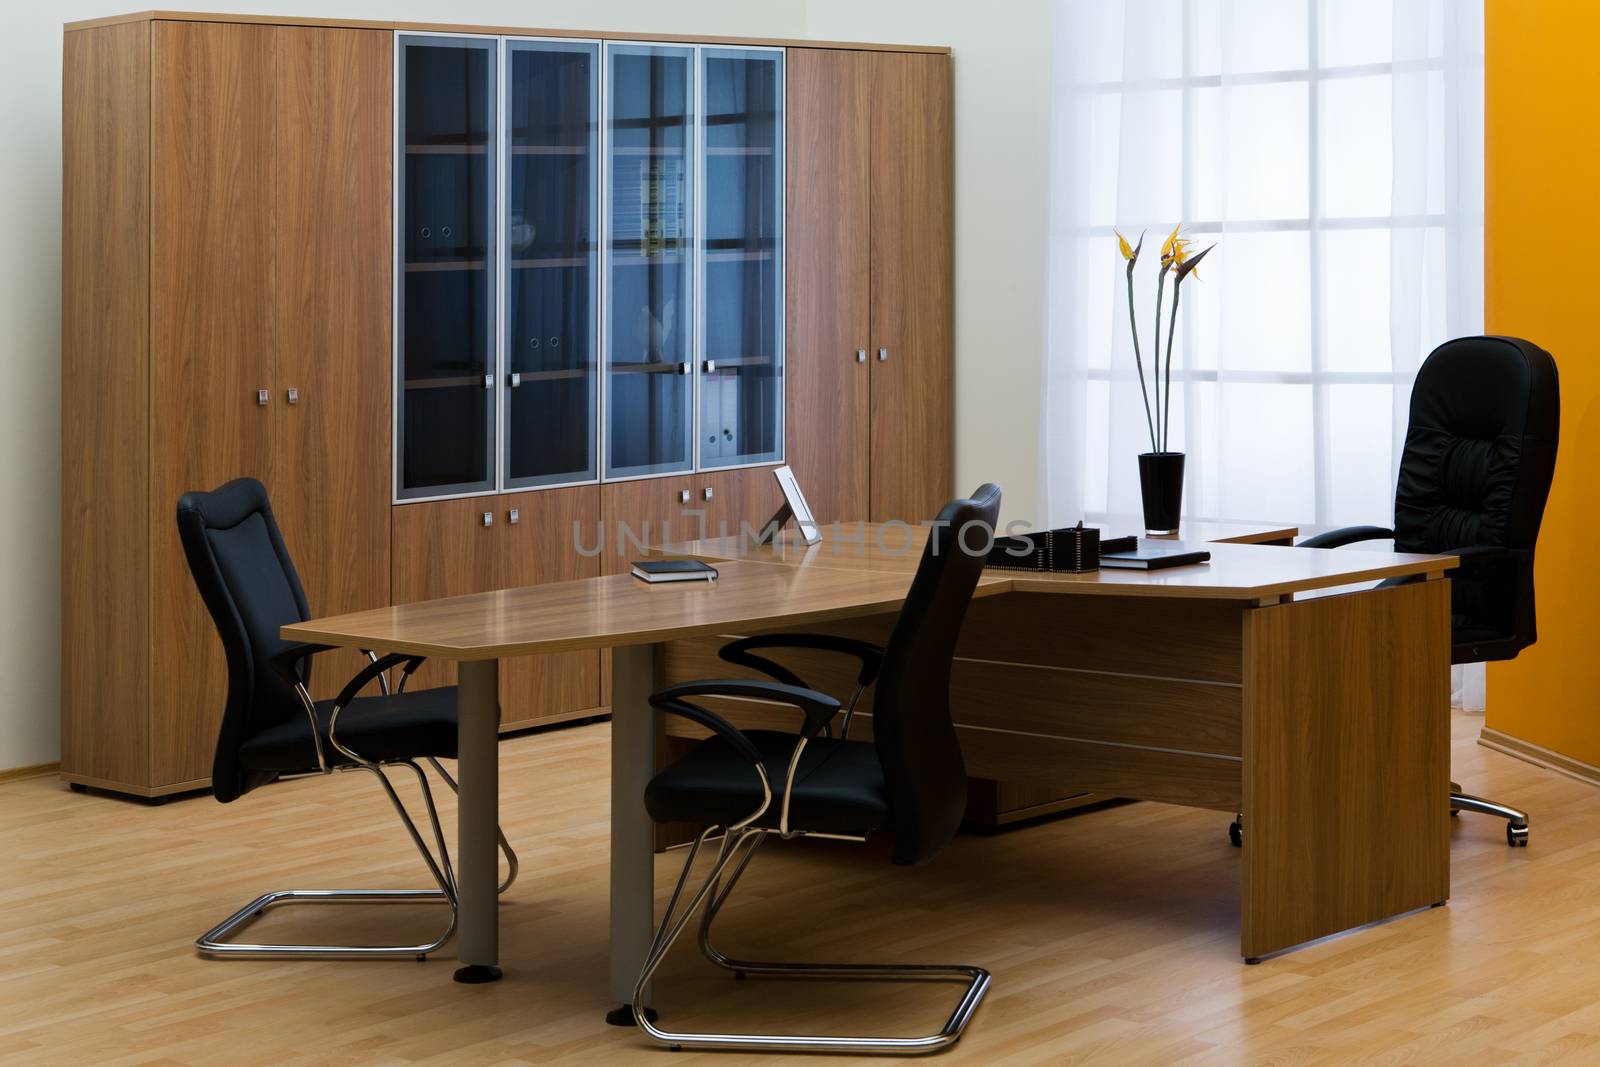 large wooden desk in a modern office